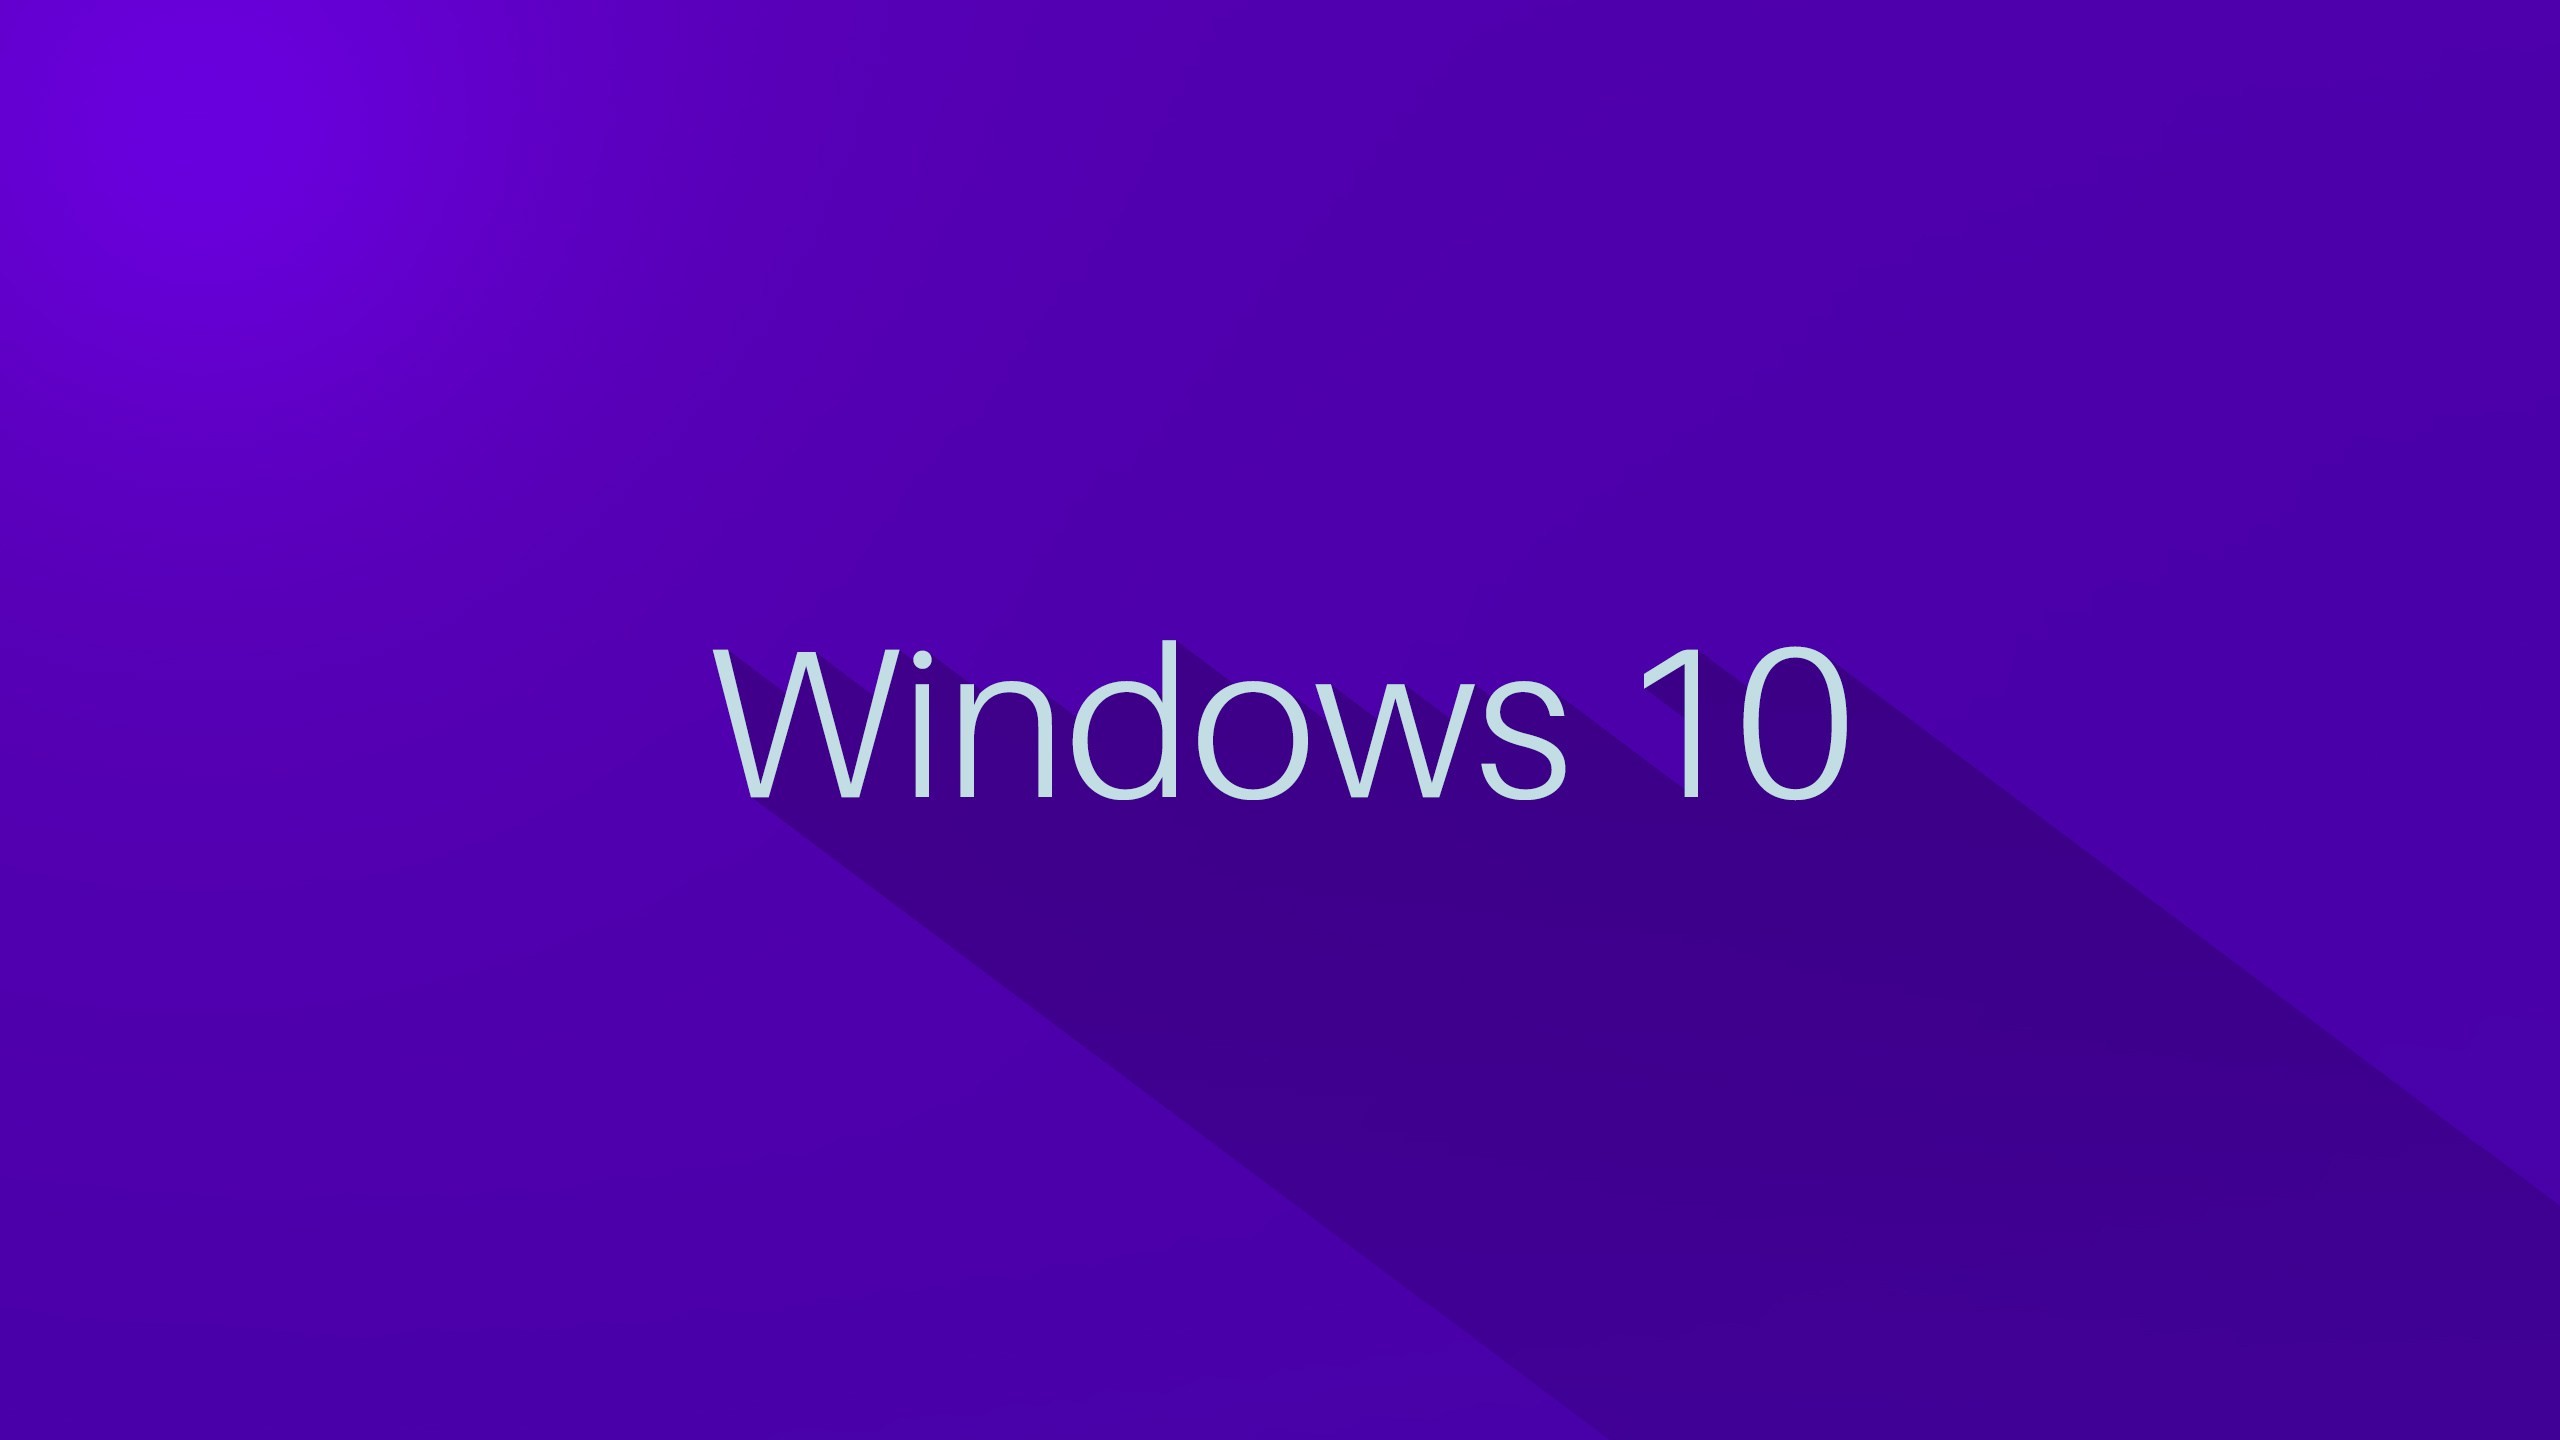 2560x1440 Microsoft Windows 10 Wallpaper Themes Wallpapersafari